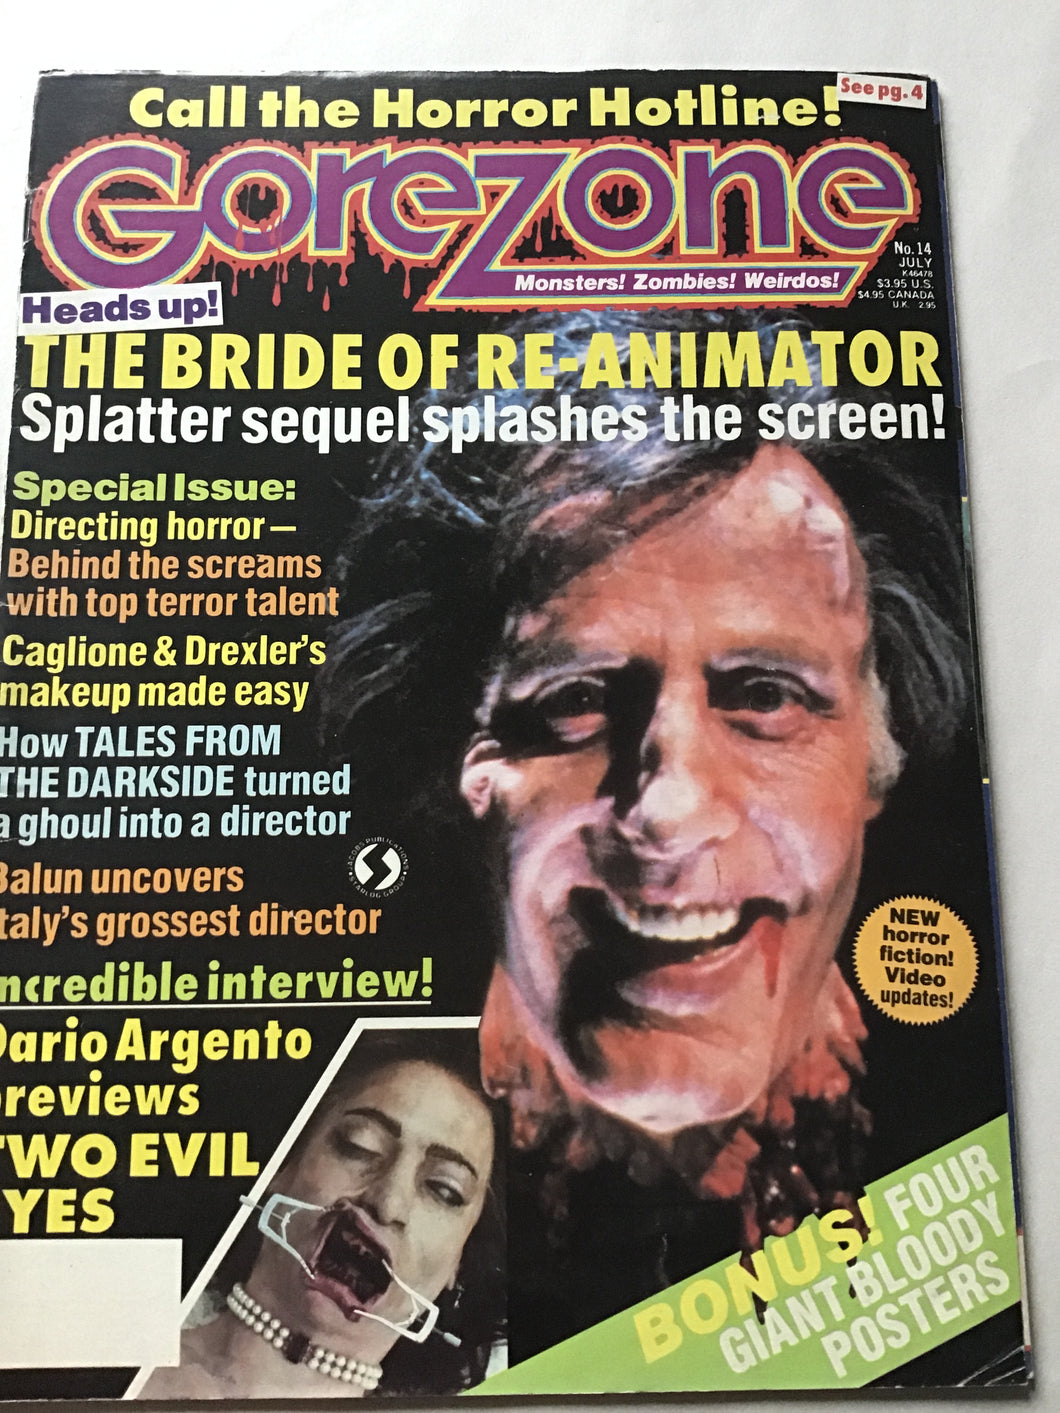 Gore zone magazine number 14 July 1990